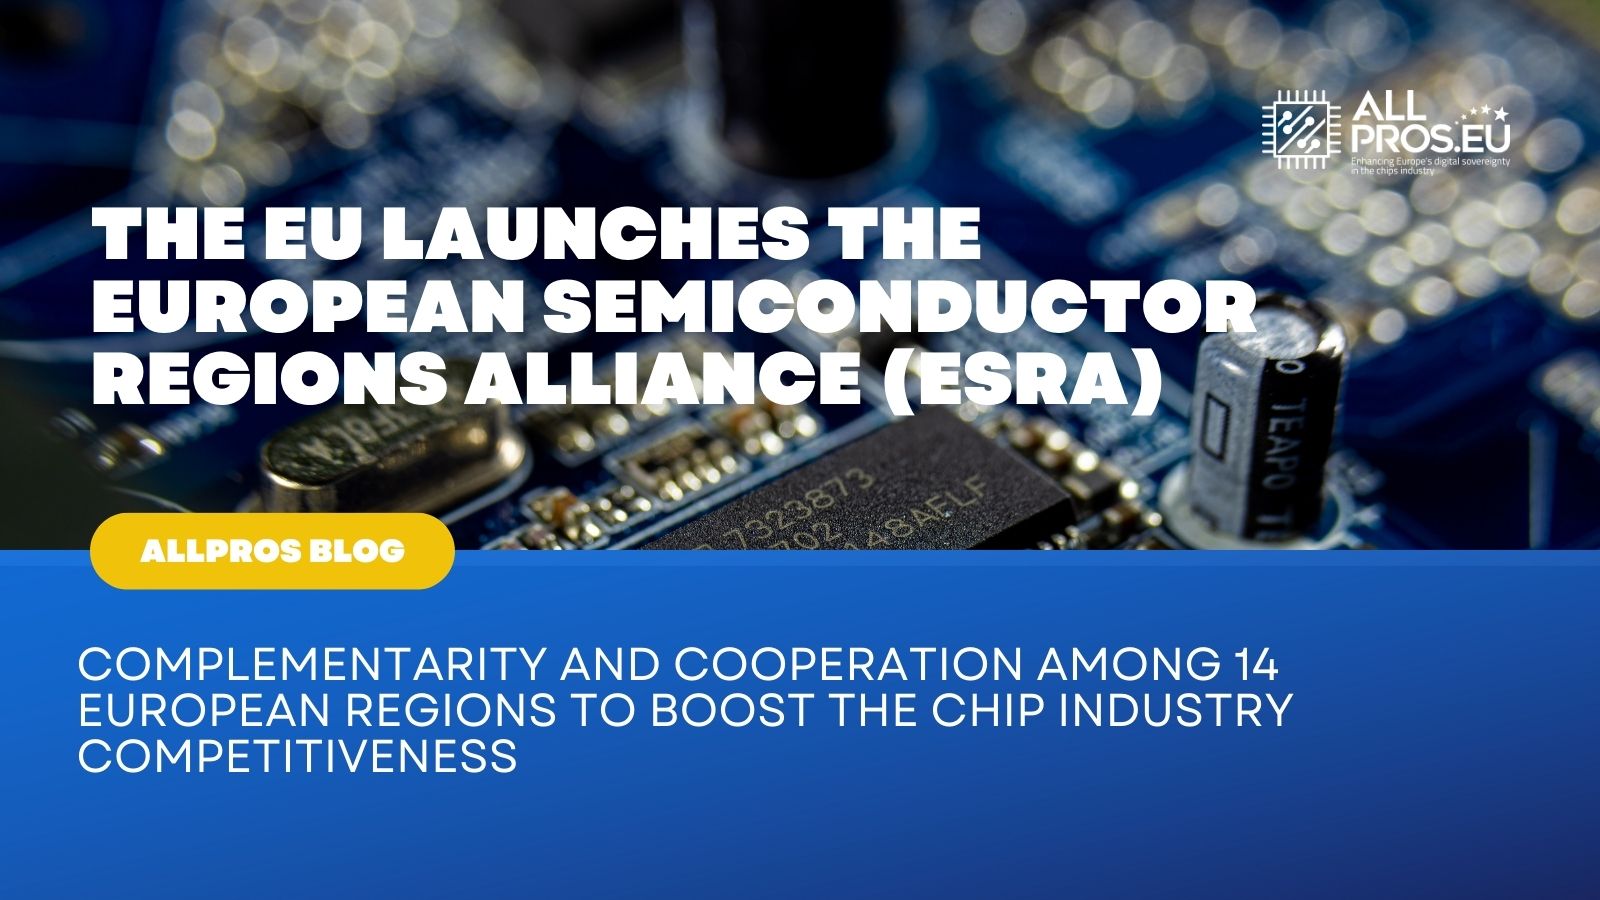 The Eu Launches the European semiconductor regions alliance (esra)